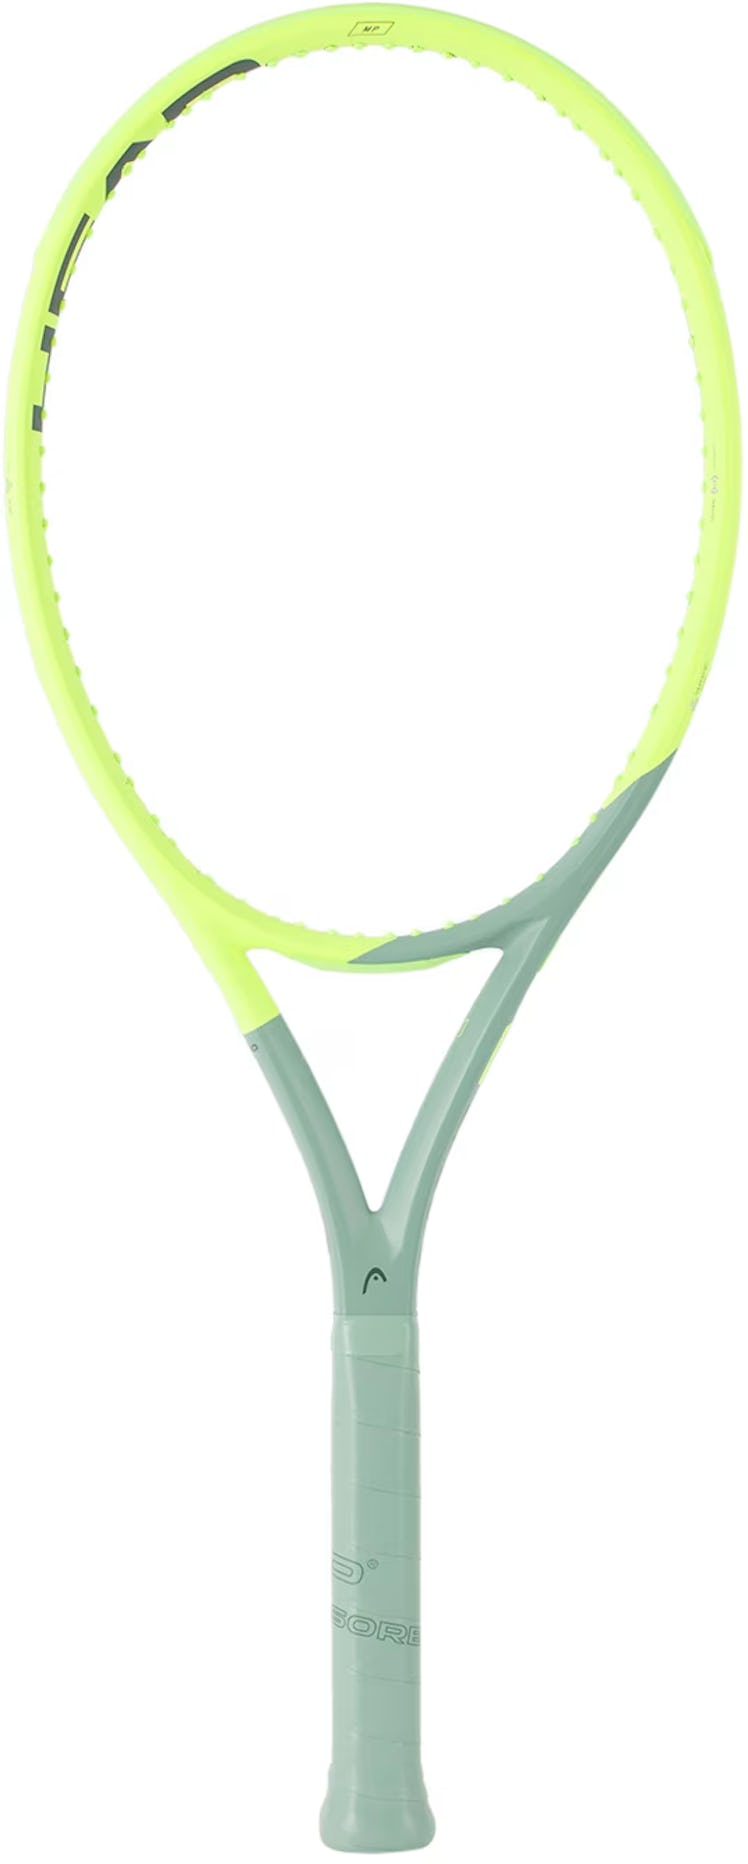 Blue & Green Extreme MP Tennis Racket